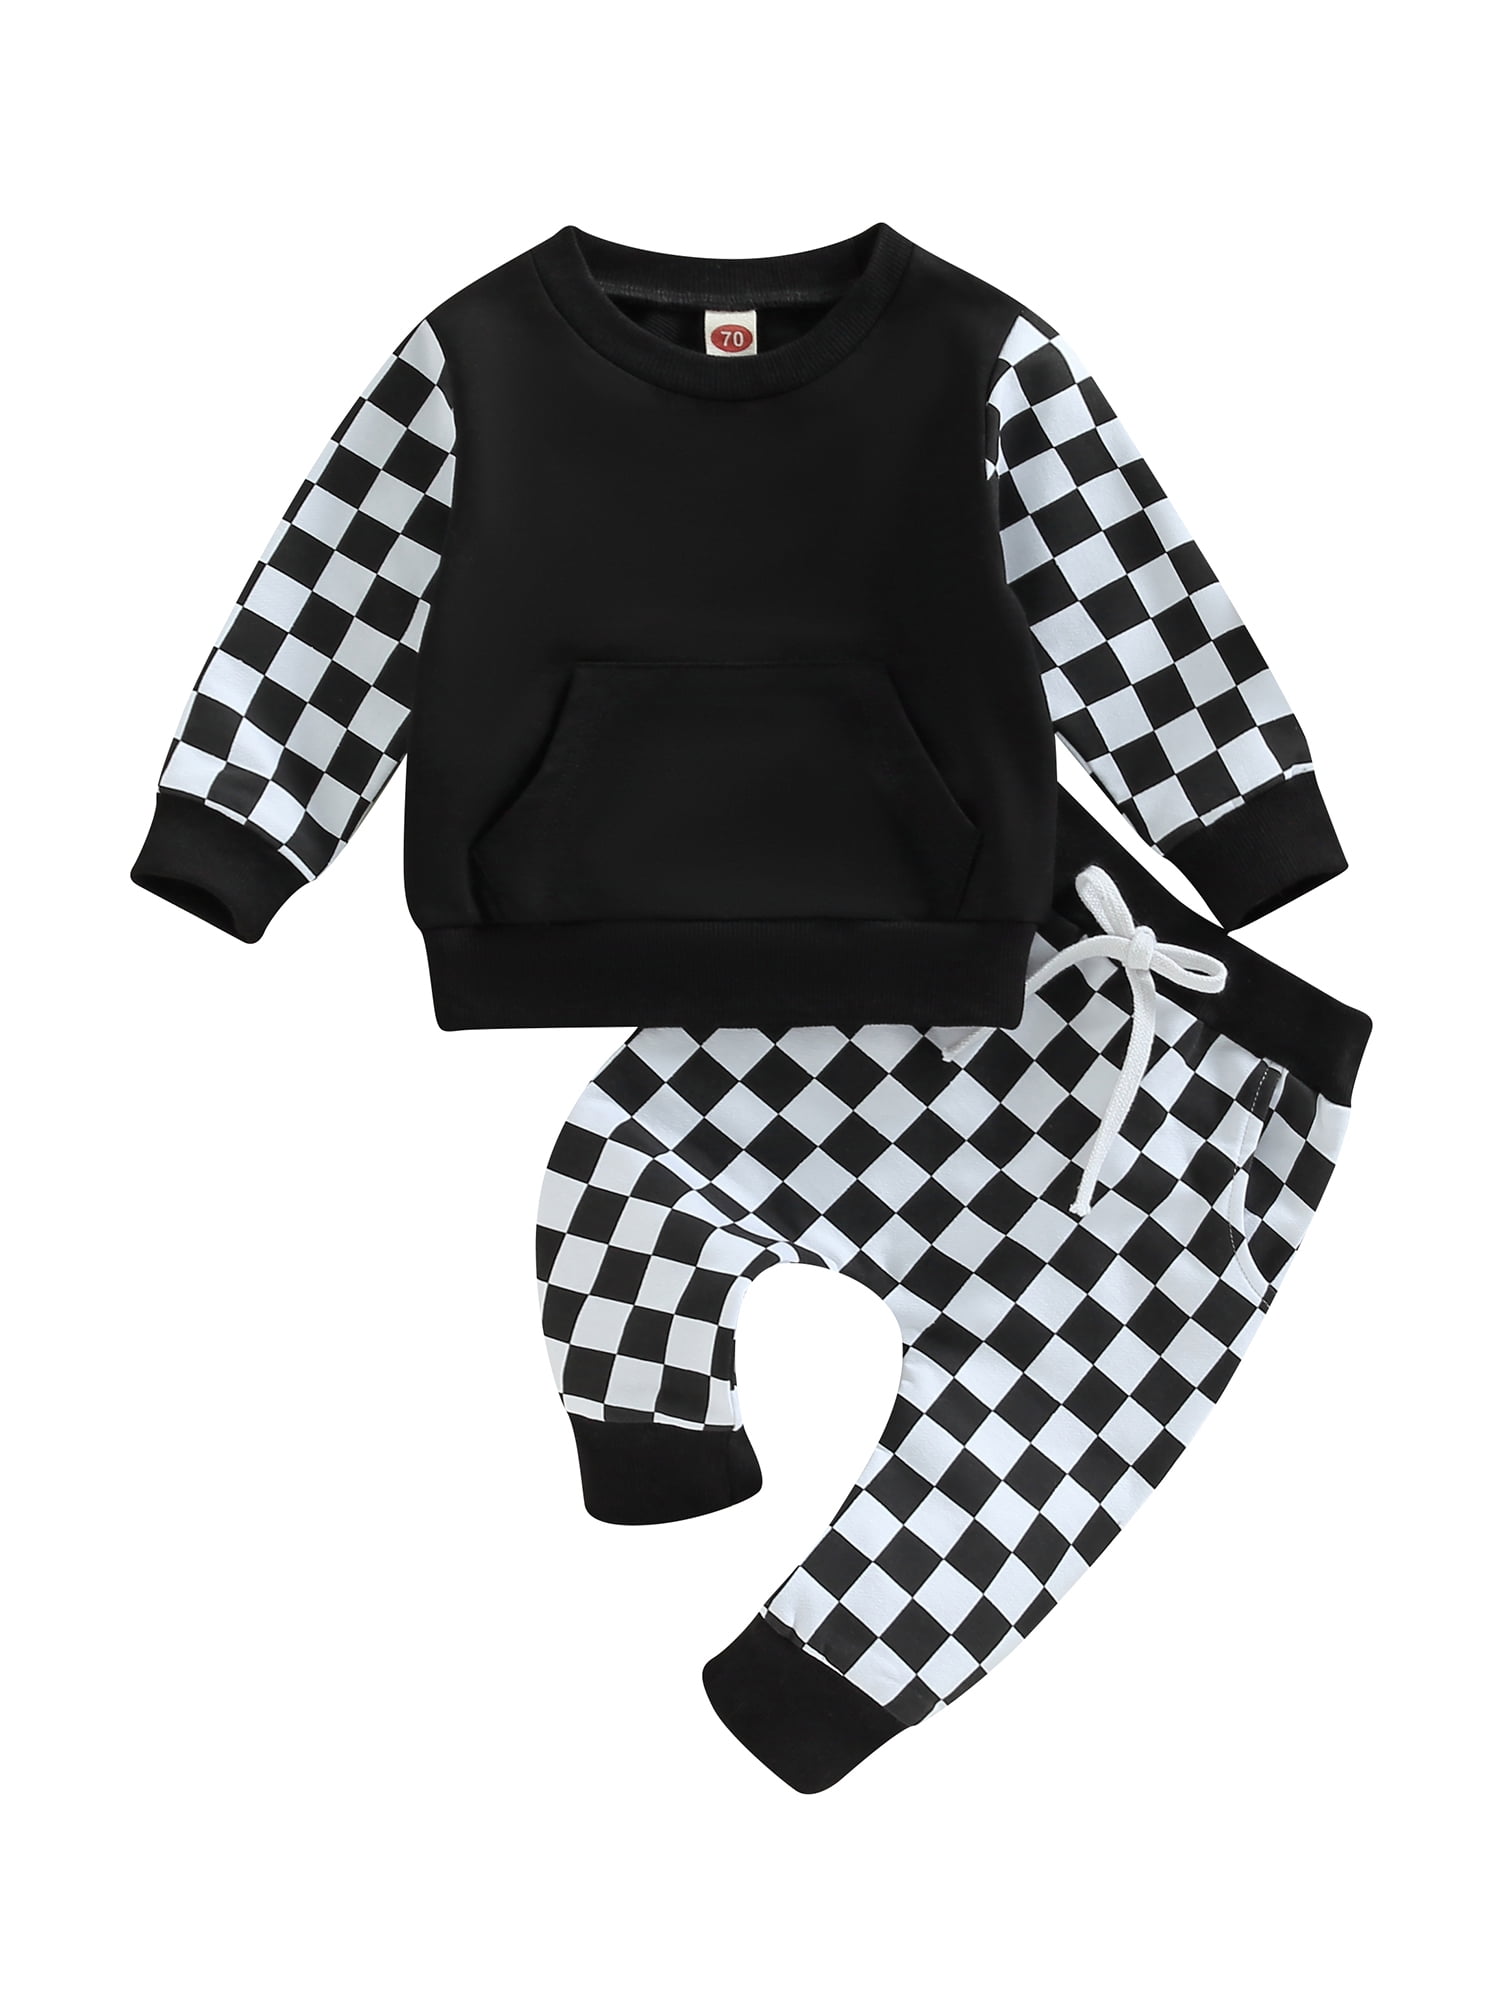 woshilaocai Baby Boy Girl Checkered Plaid Outfits